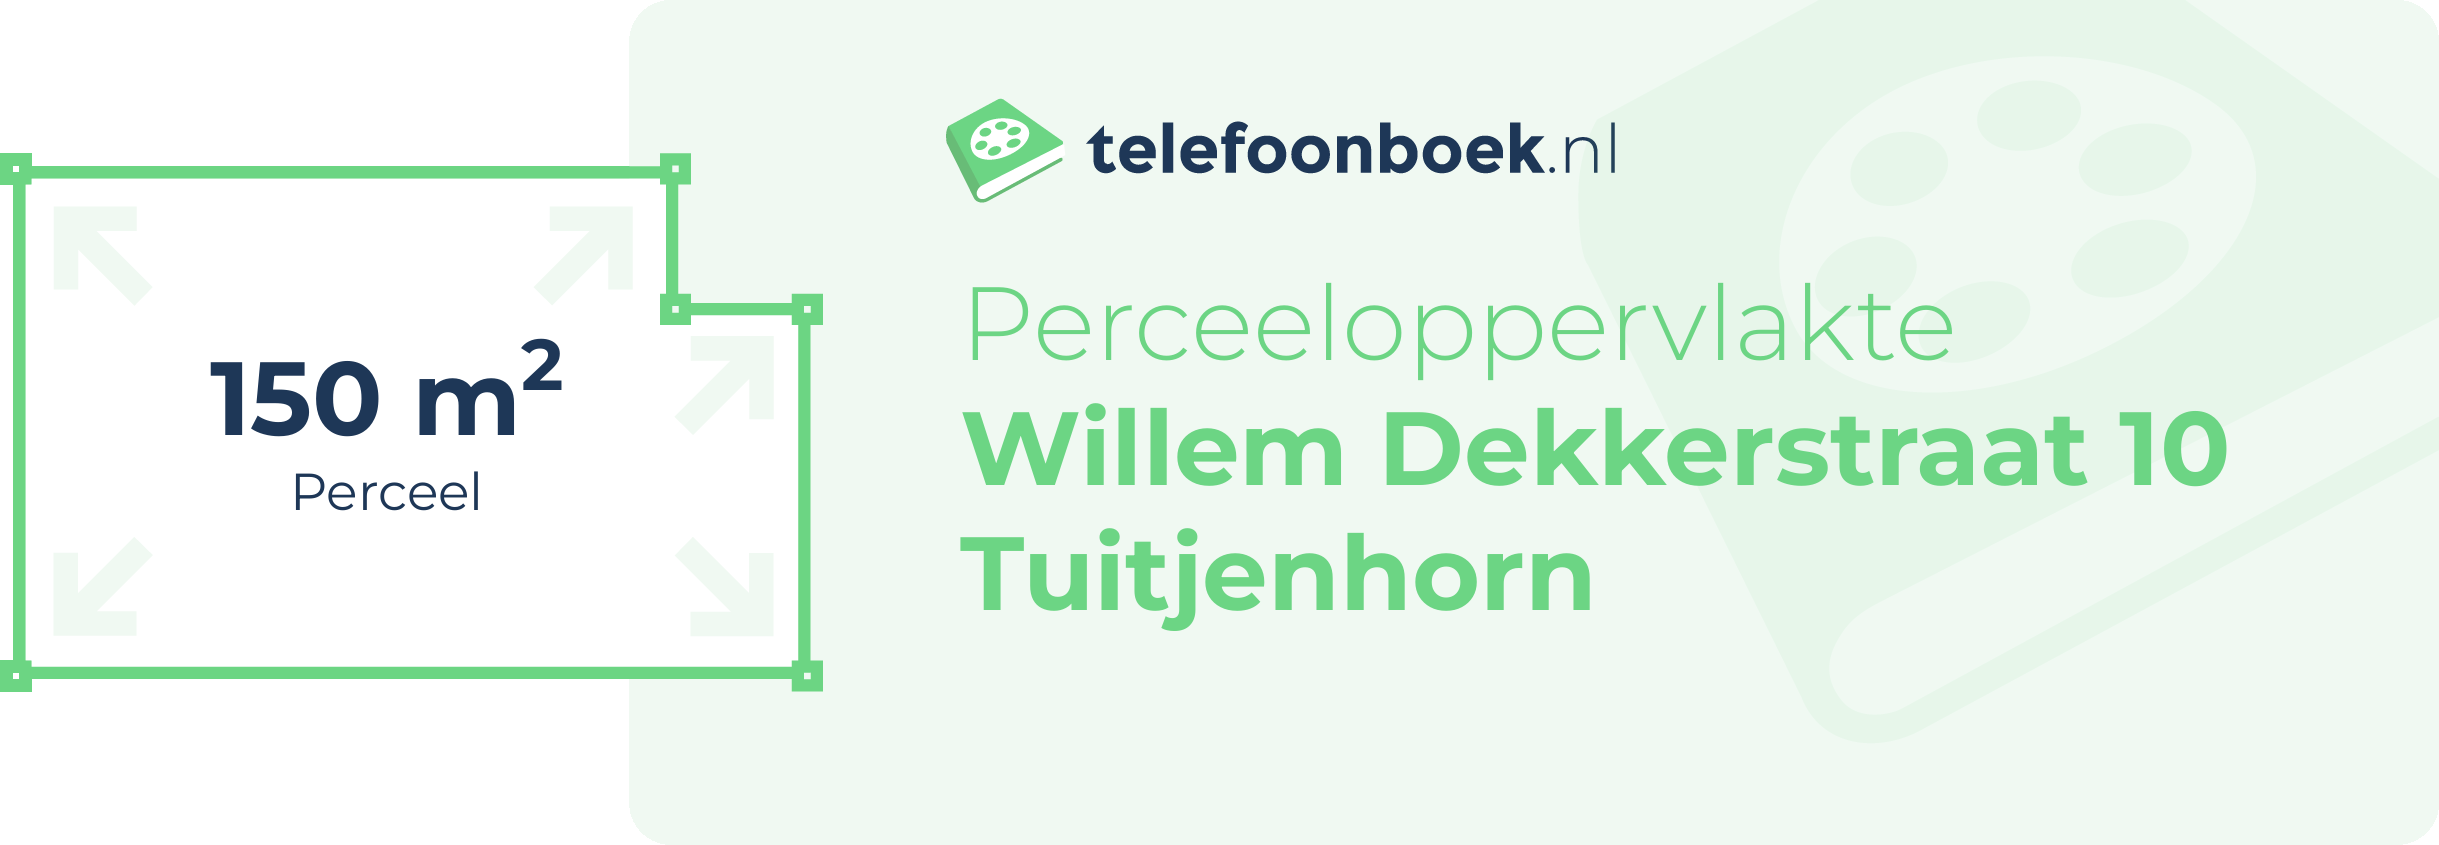 Perceeloppervlakte Willem Dekkerstraat 10 Tuitjenhorn